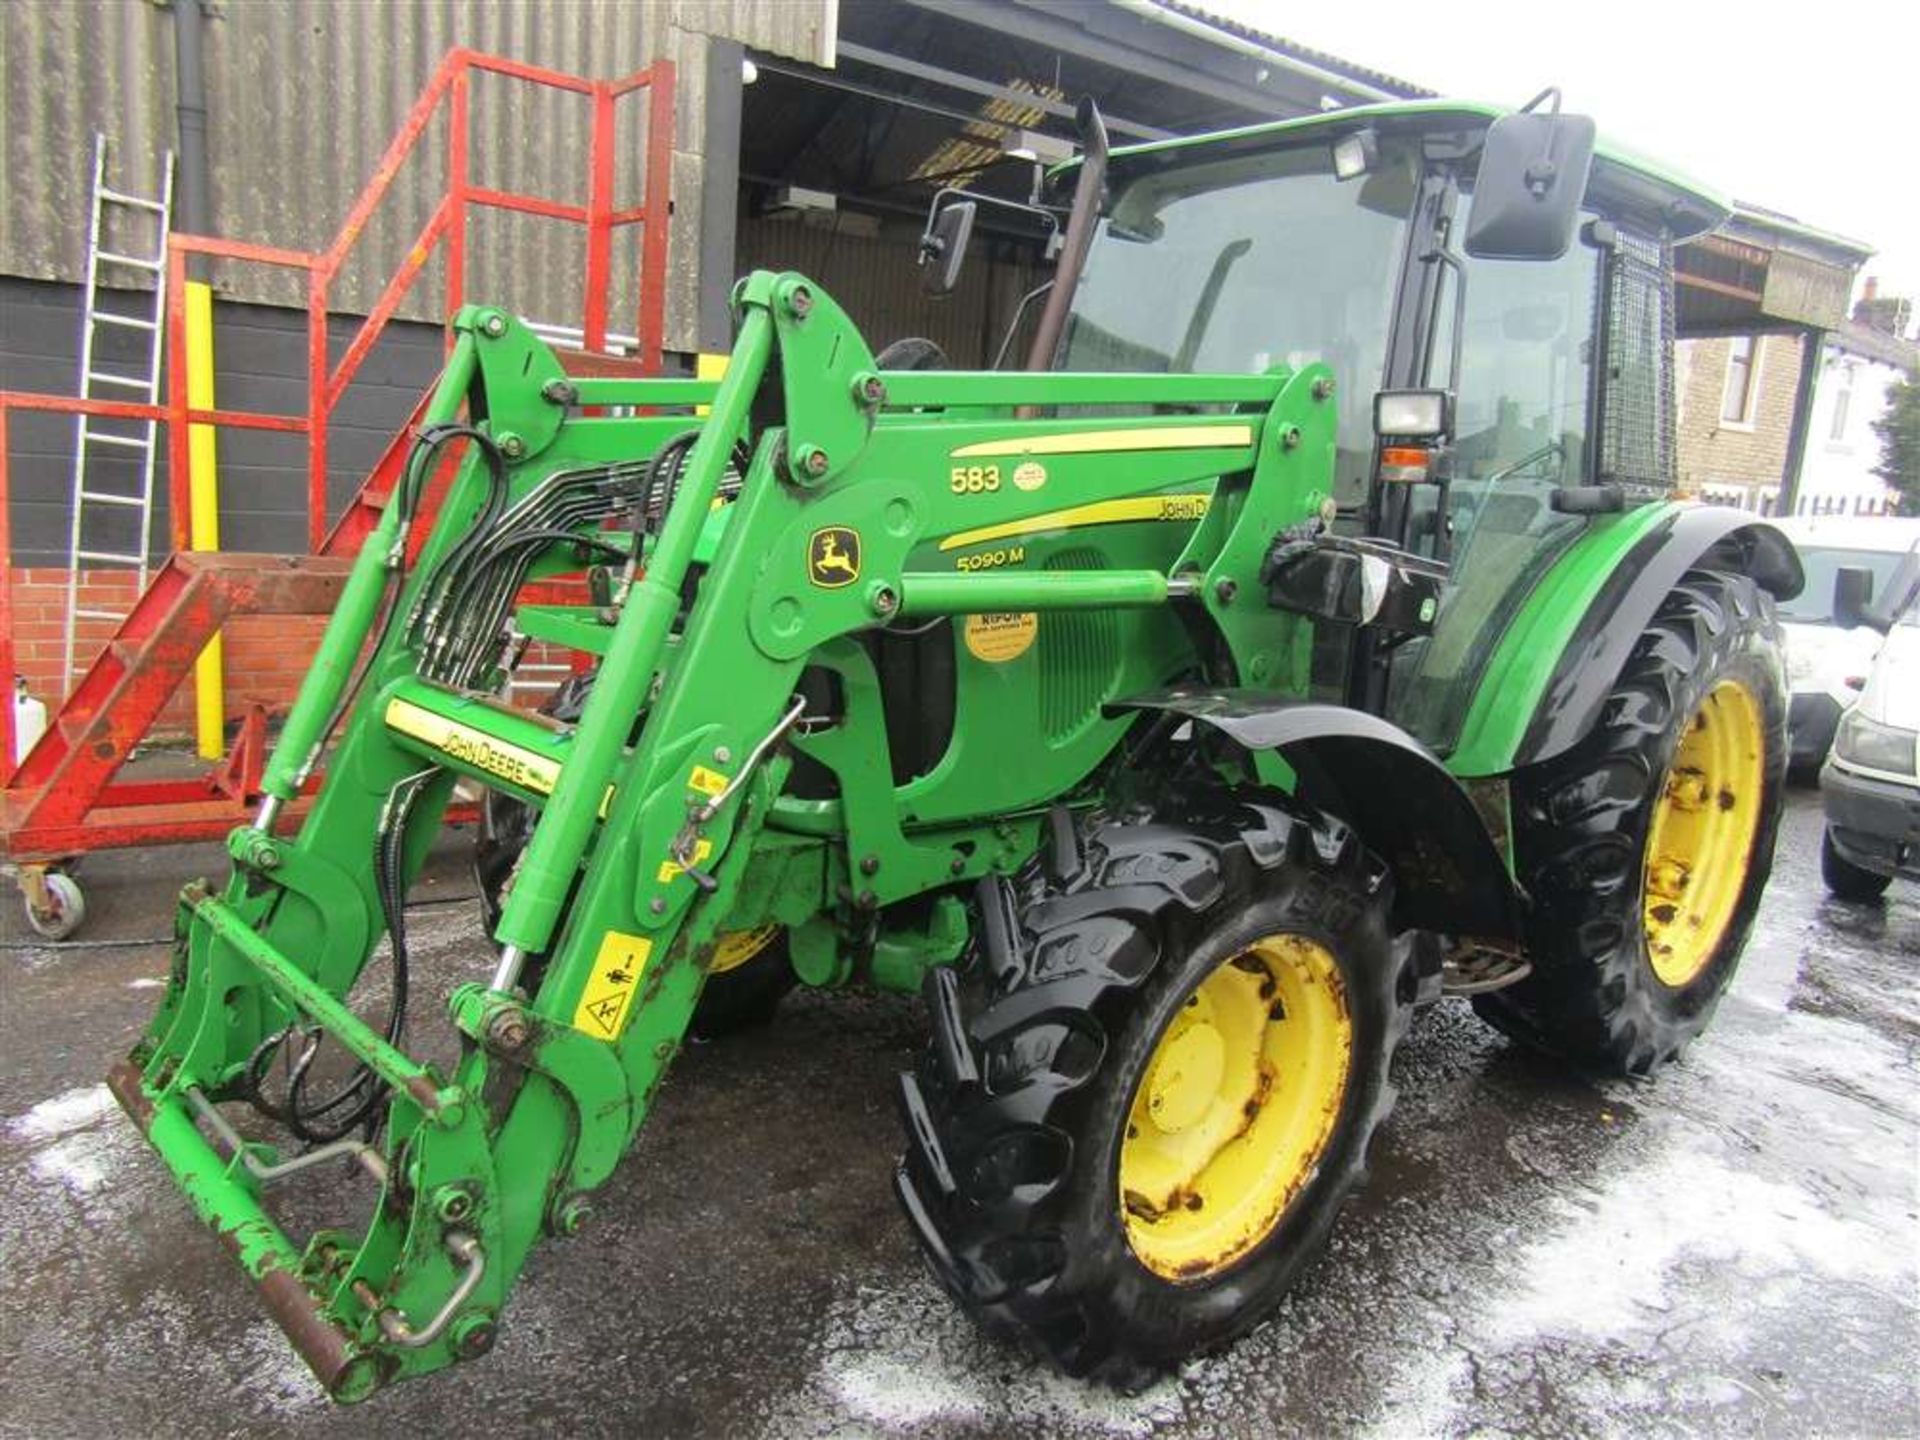 2011 11 reg John Deere 5090m Tractor c/w 583 Loader (Direct Council) - Image 2 of 7